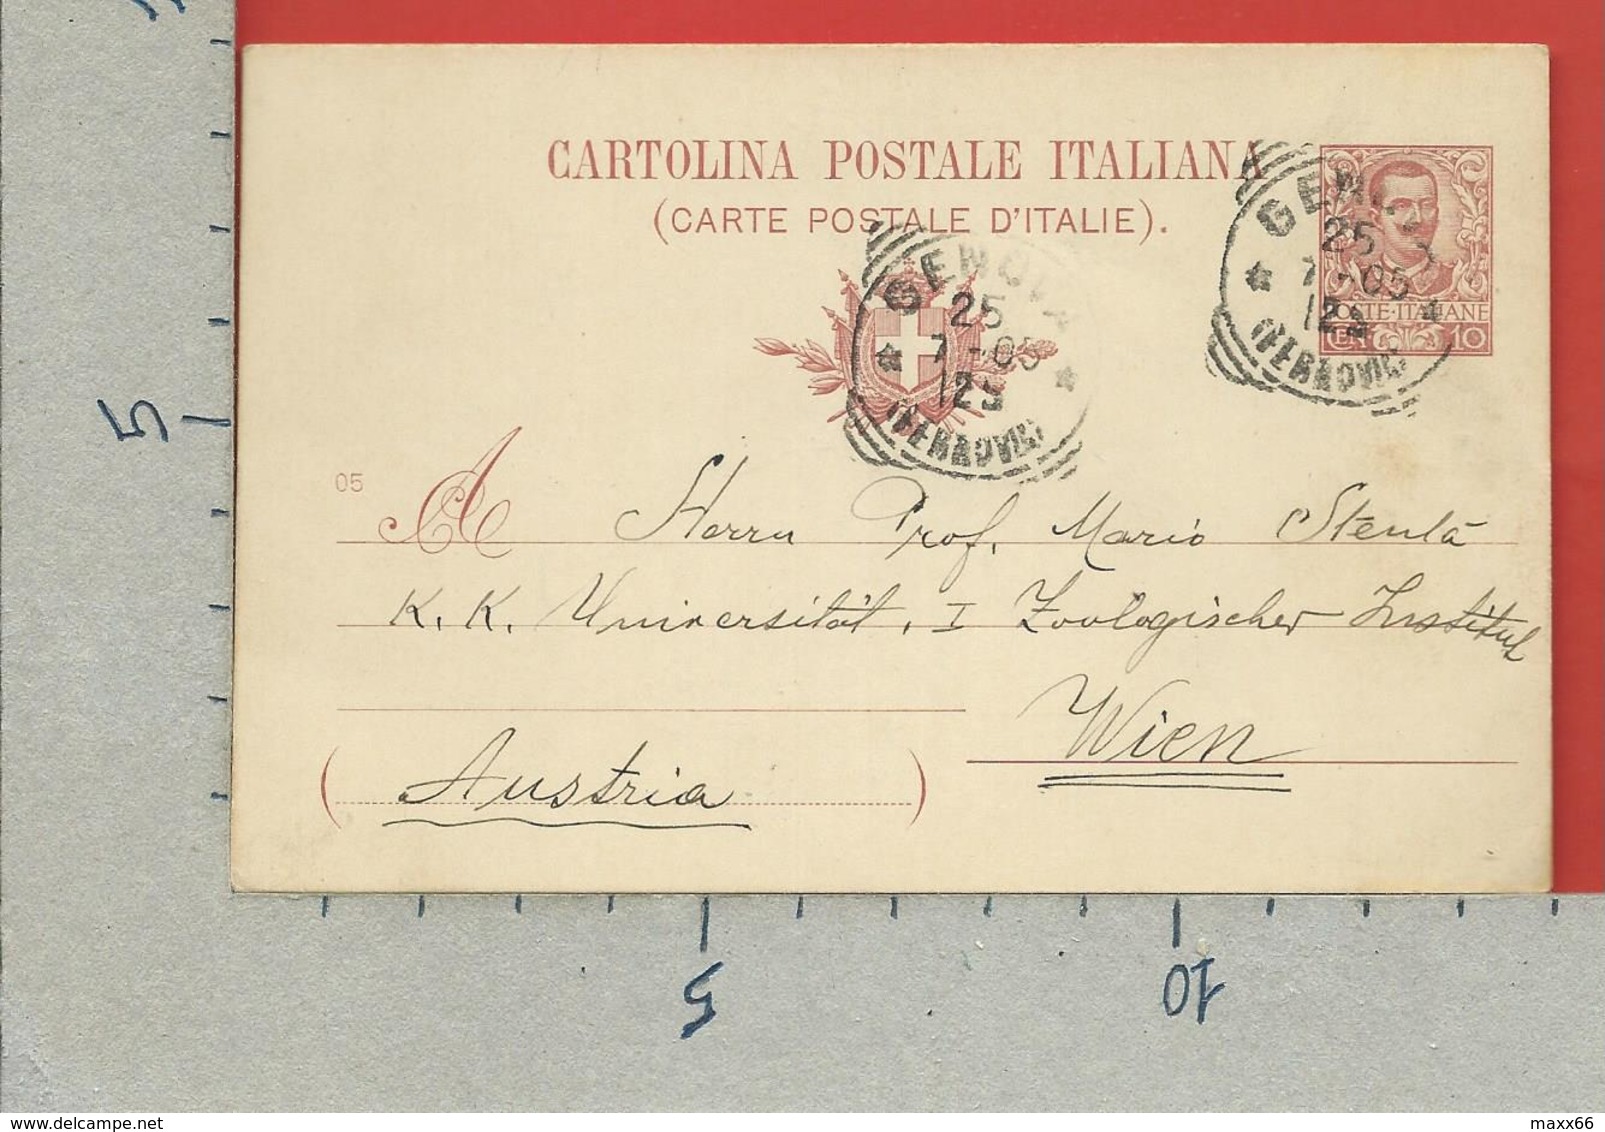 CARTOLINA POSTALE VG ITALIA - Tipo Floreale V. Emanuele III - MARIO STENTA 1905 - S. CP30 MILL. 05 - AUSTRIA - Interi Postali